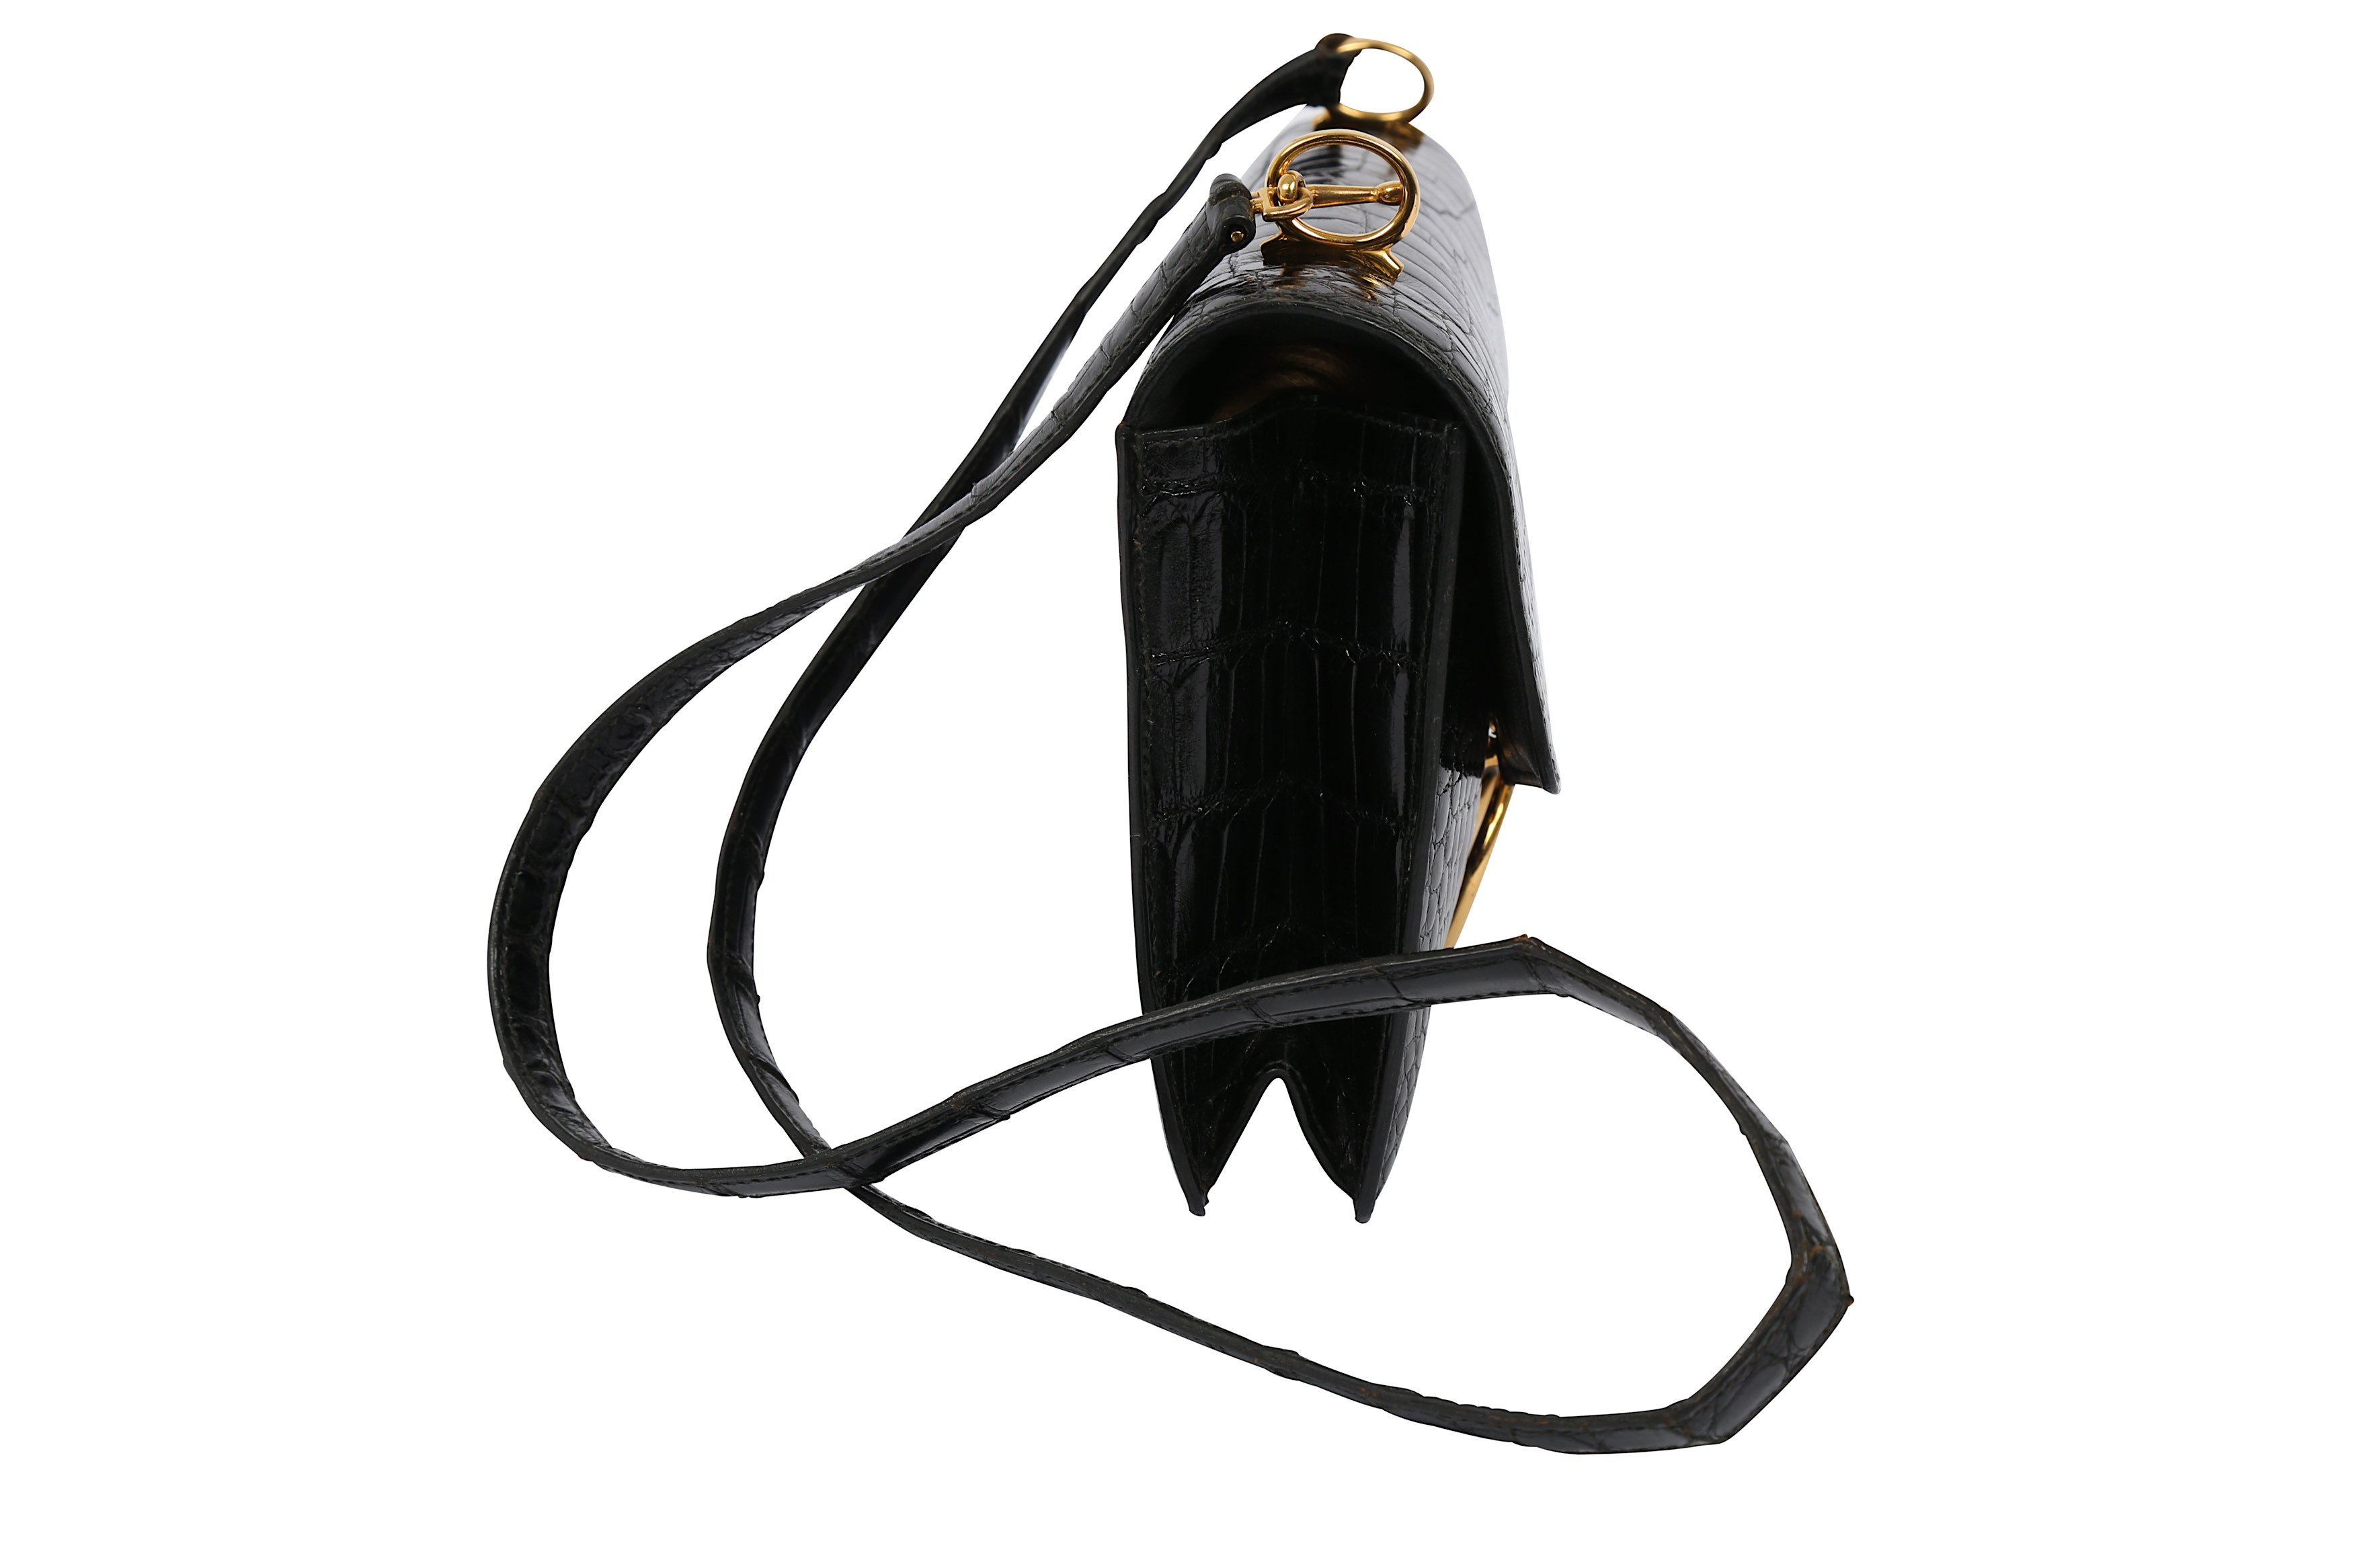 Hermes Black Crocodile Sac Ring Bag - Image 3 of 10